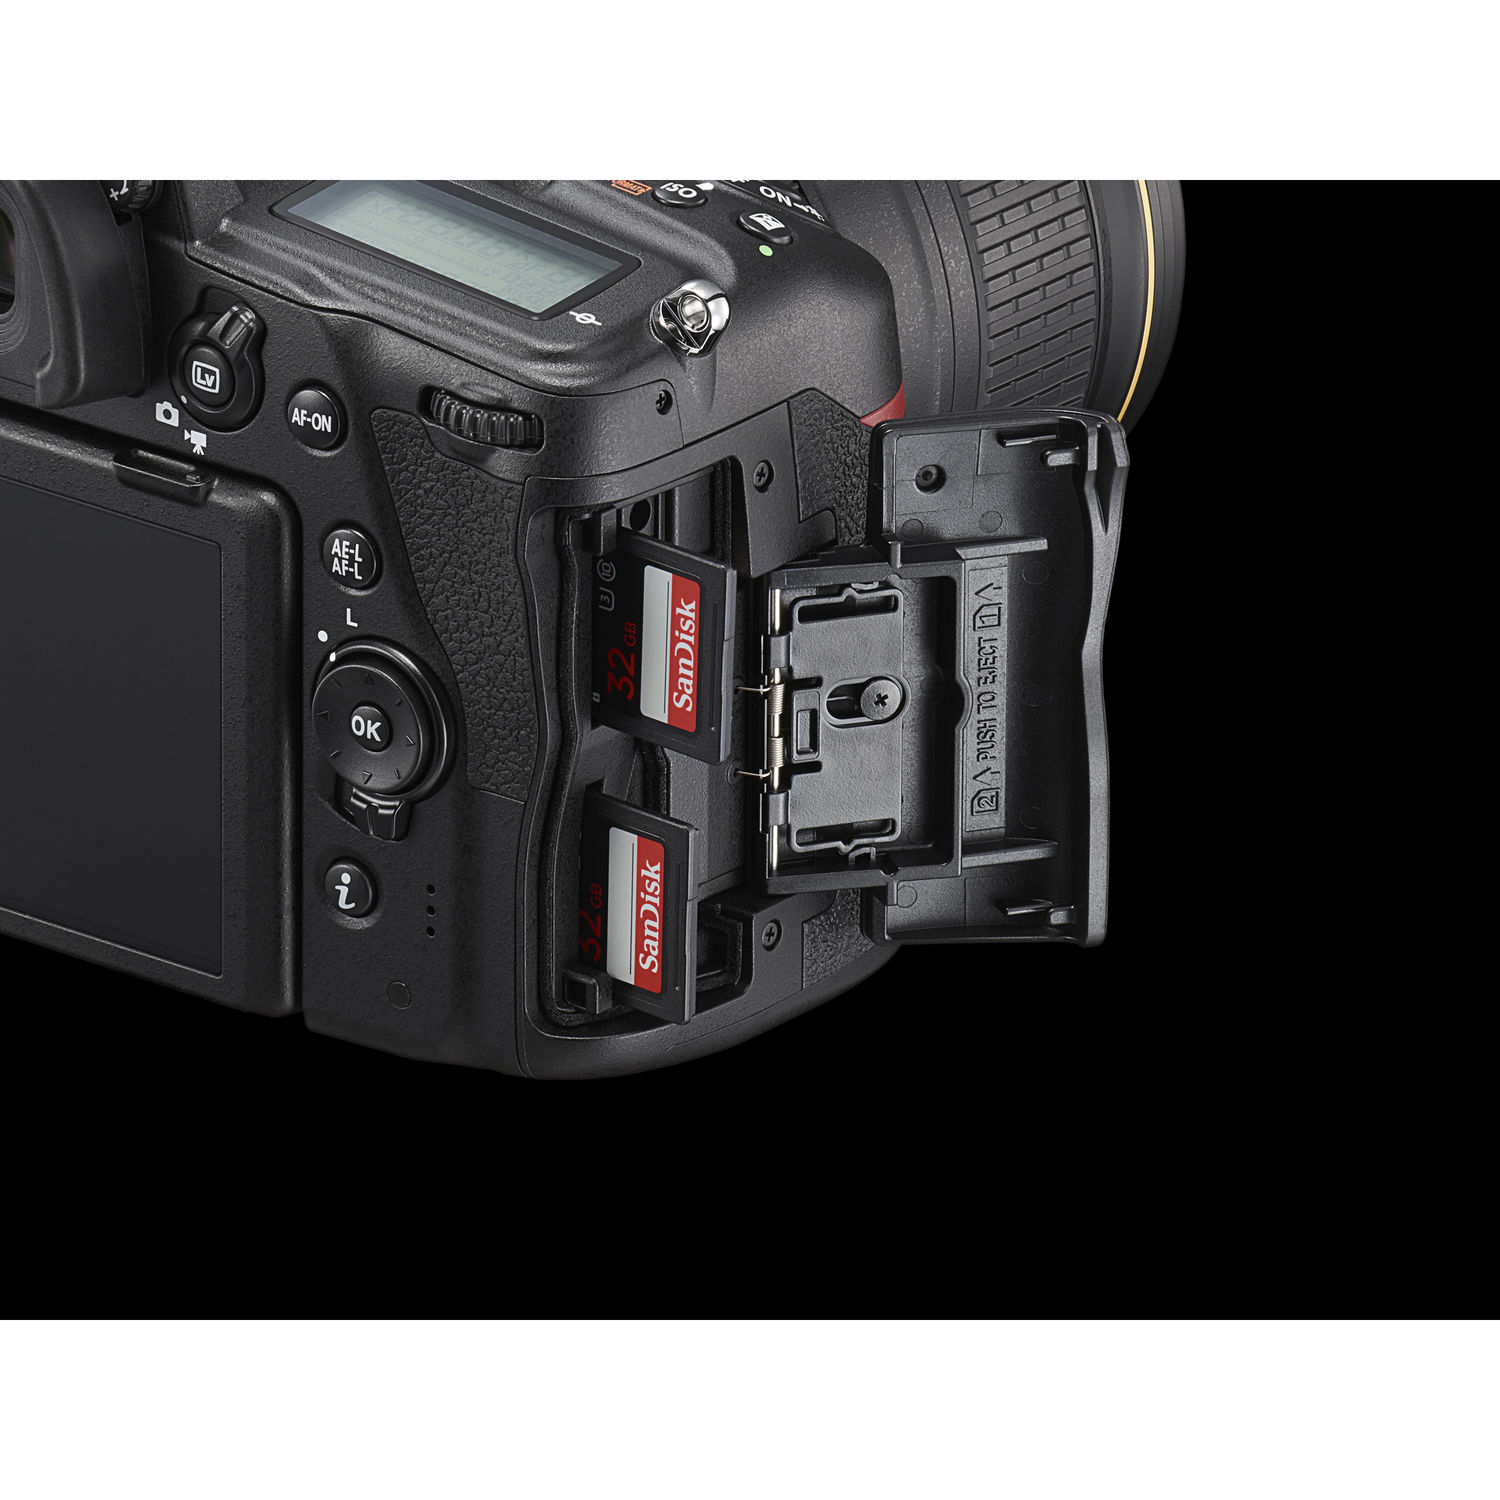 Nikon D780 24.5 MP Full Frame DSLR Camera (1618) - Video Bundle - image 5 of 5